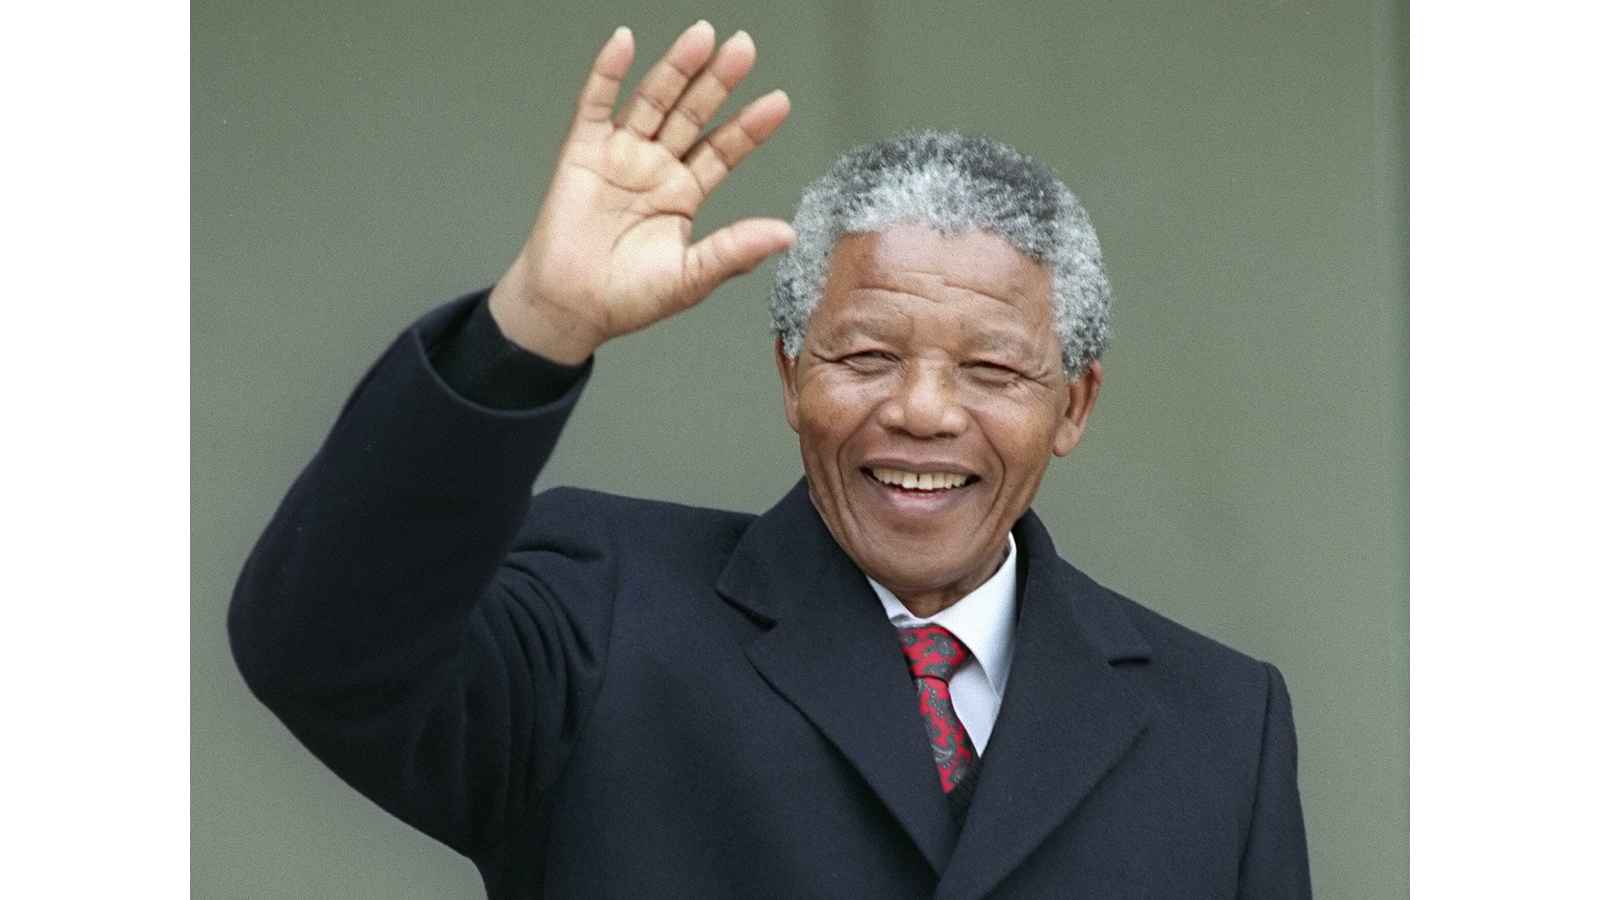 Nelson Mandela International Day 2023: Date, History, Facts about Nelson Mandela